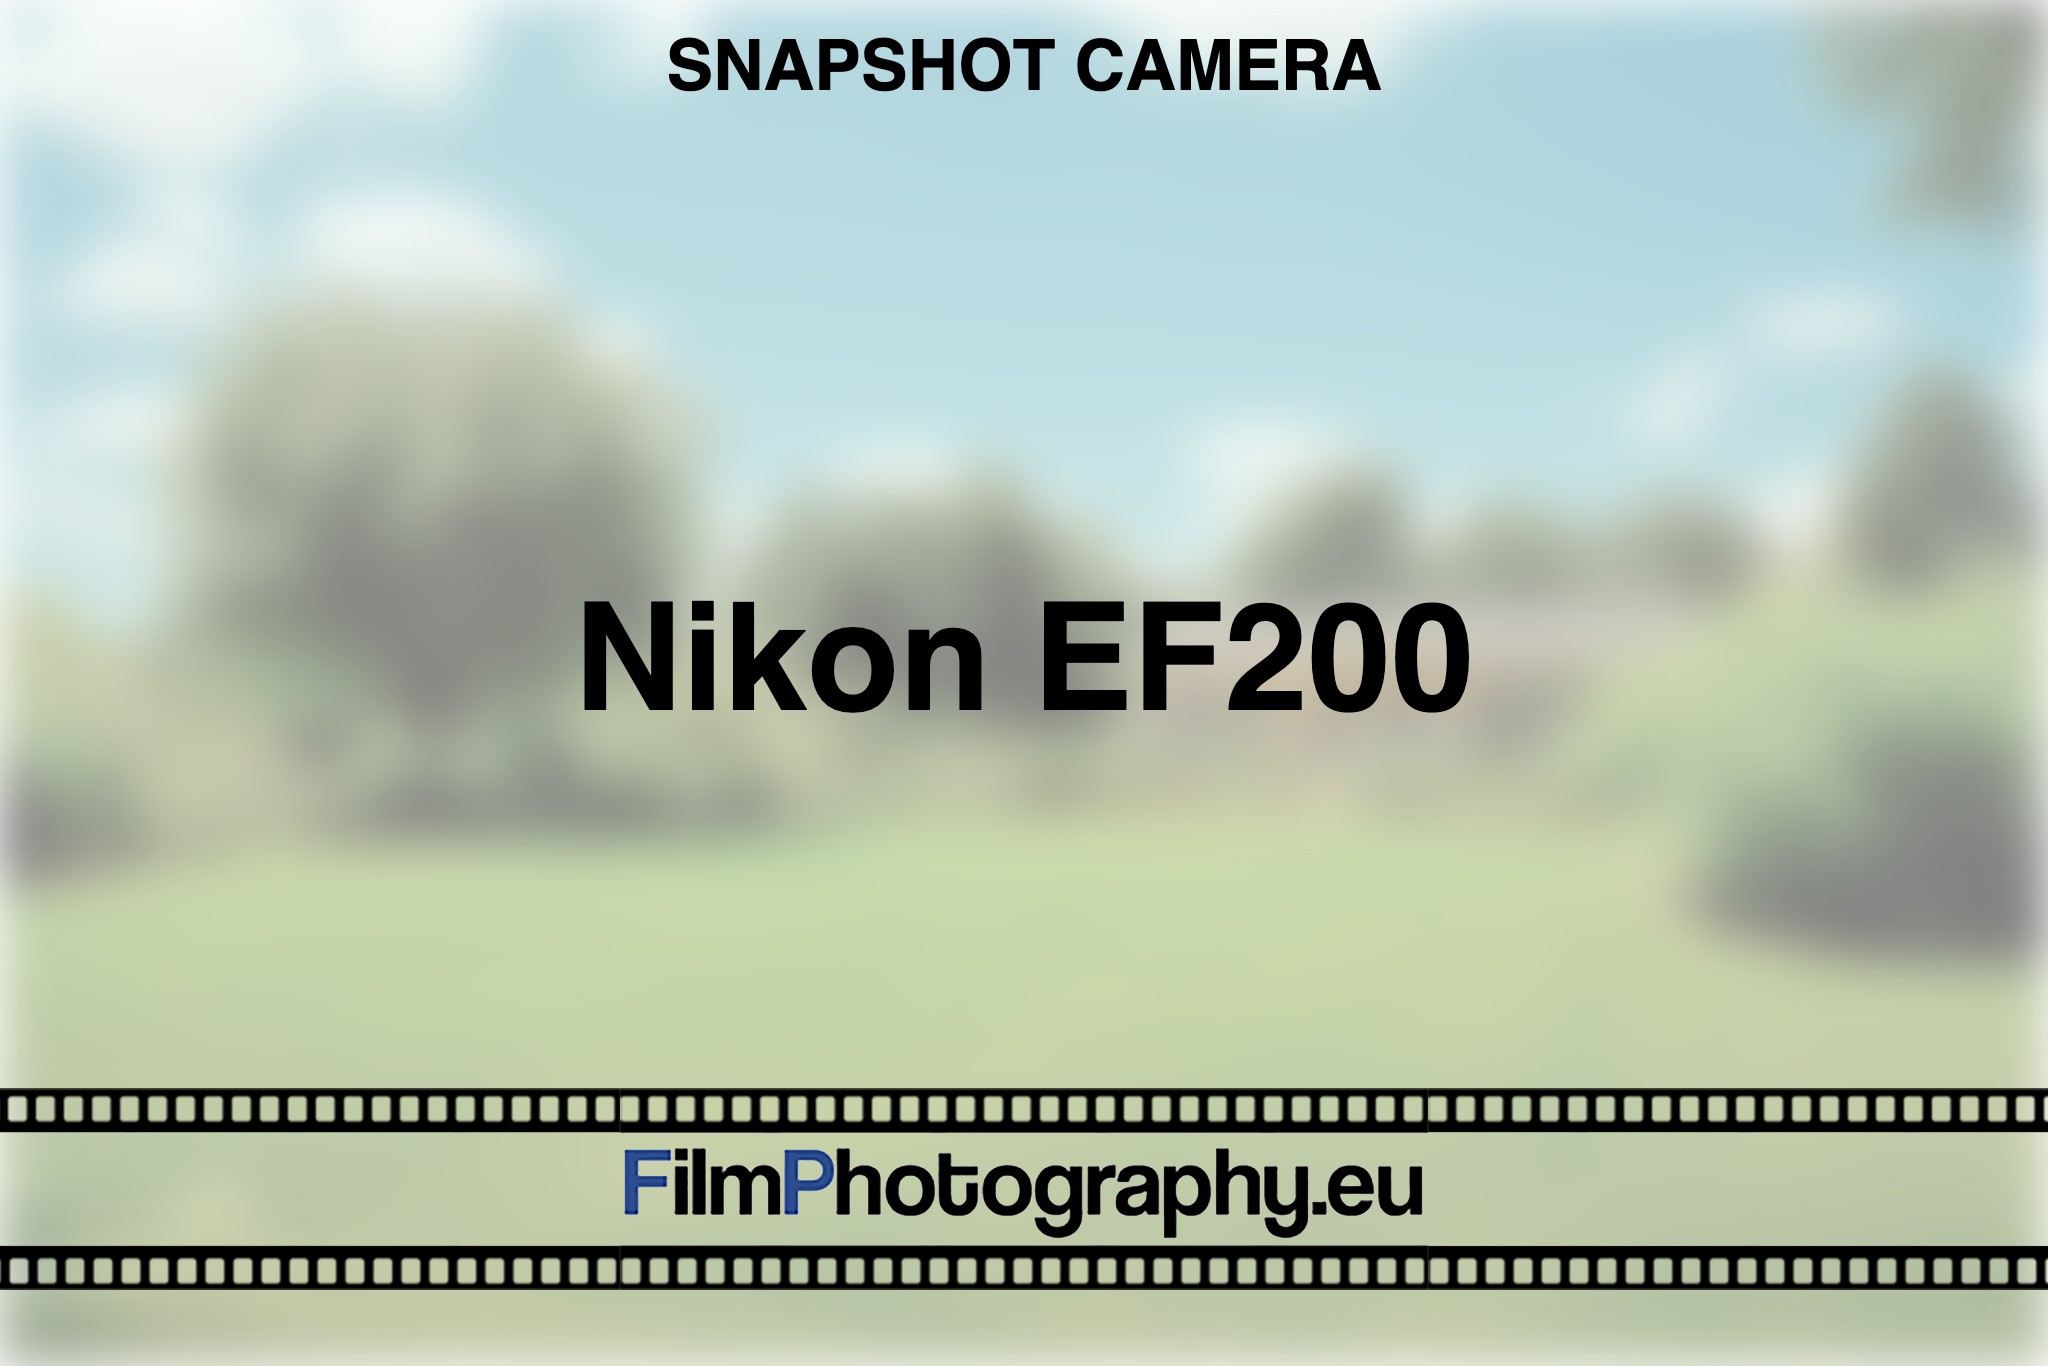 nikon-ef200-snapshot-camera-bnv